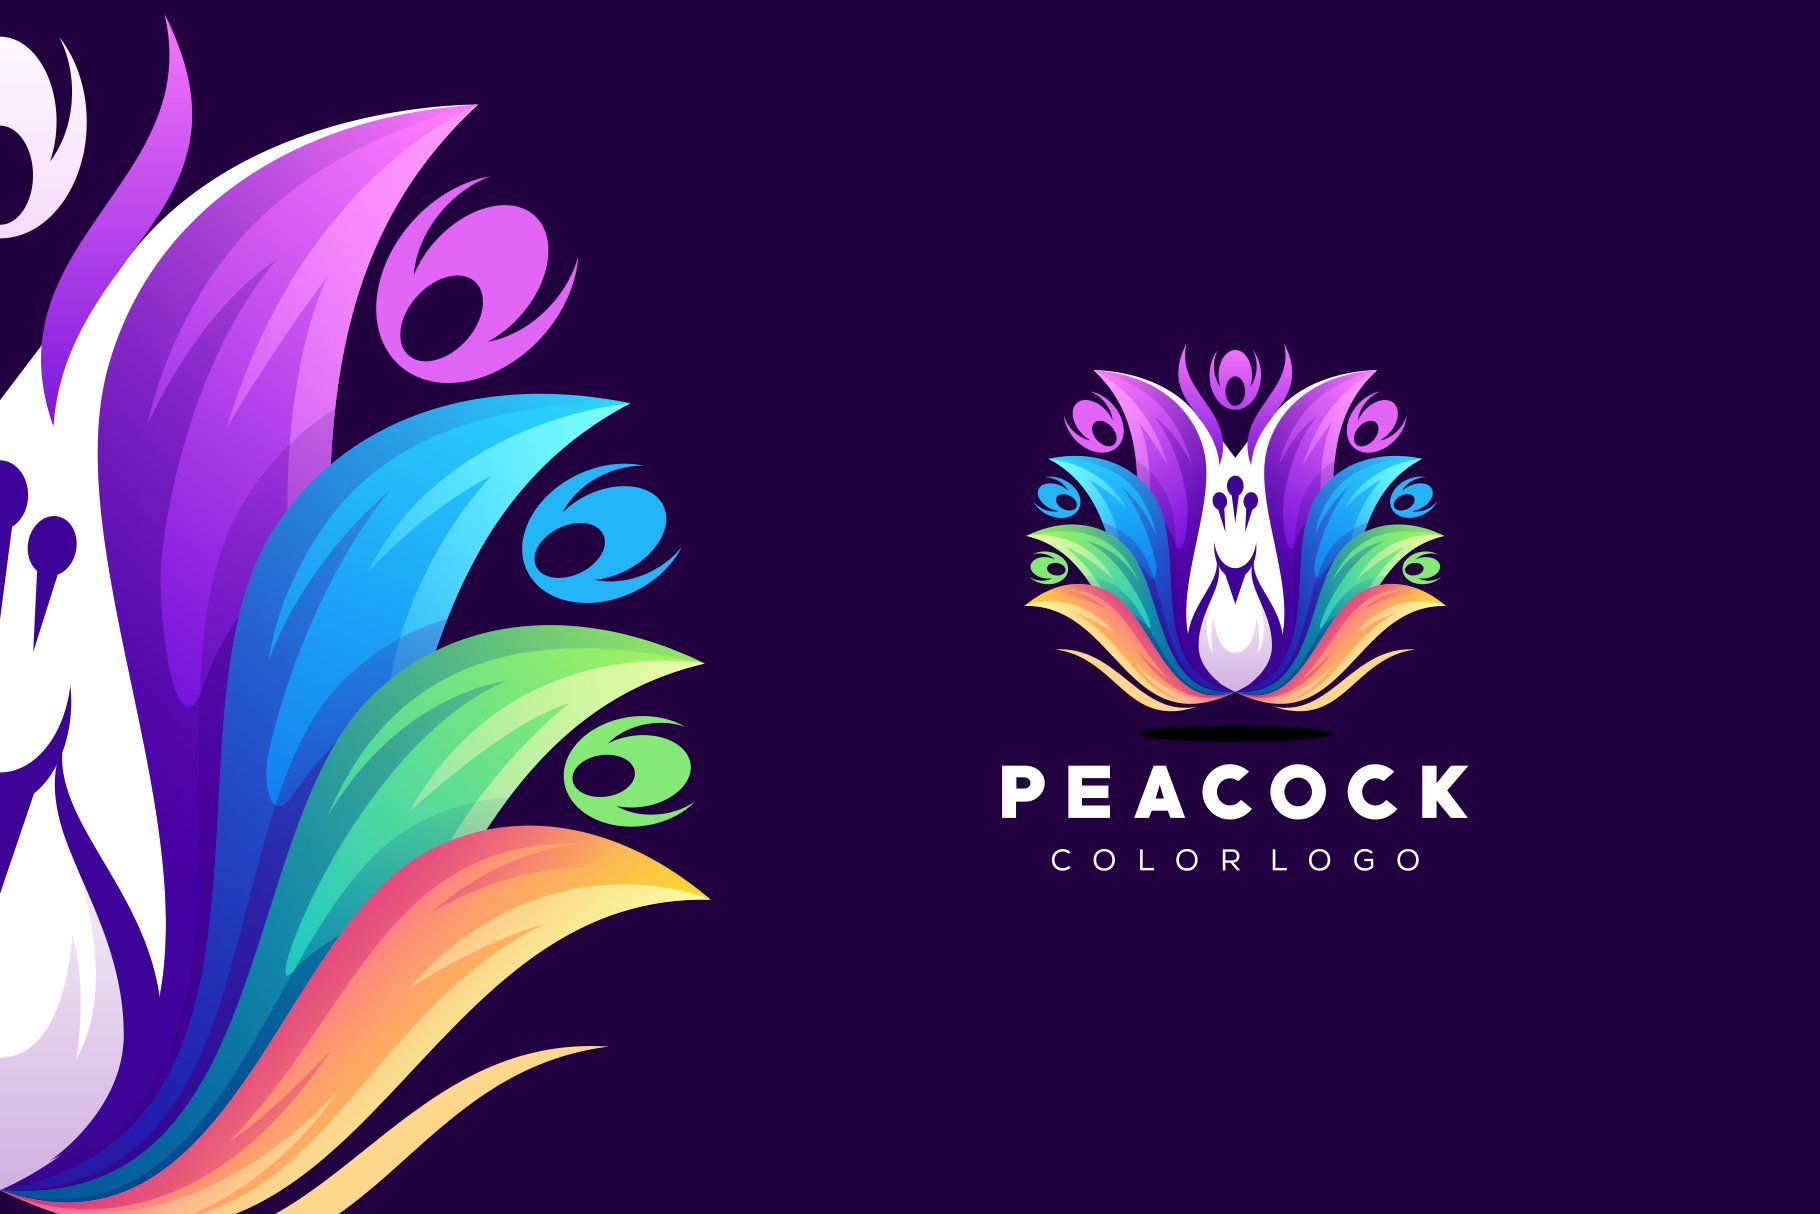 Fullcolor Peacock Logo cover image.